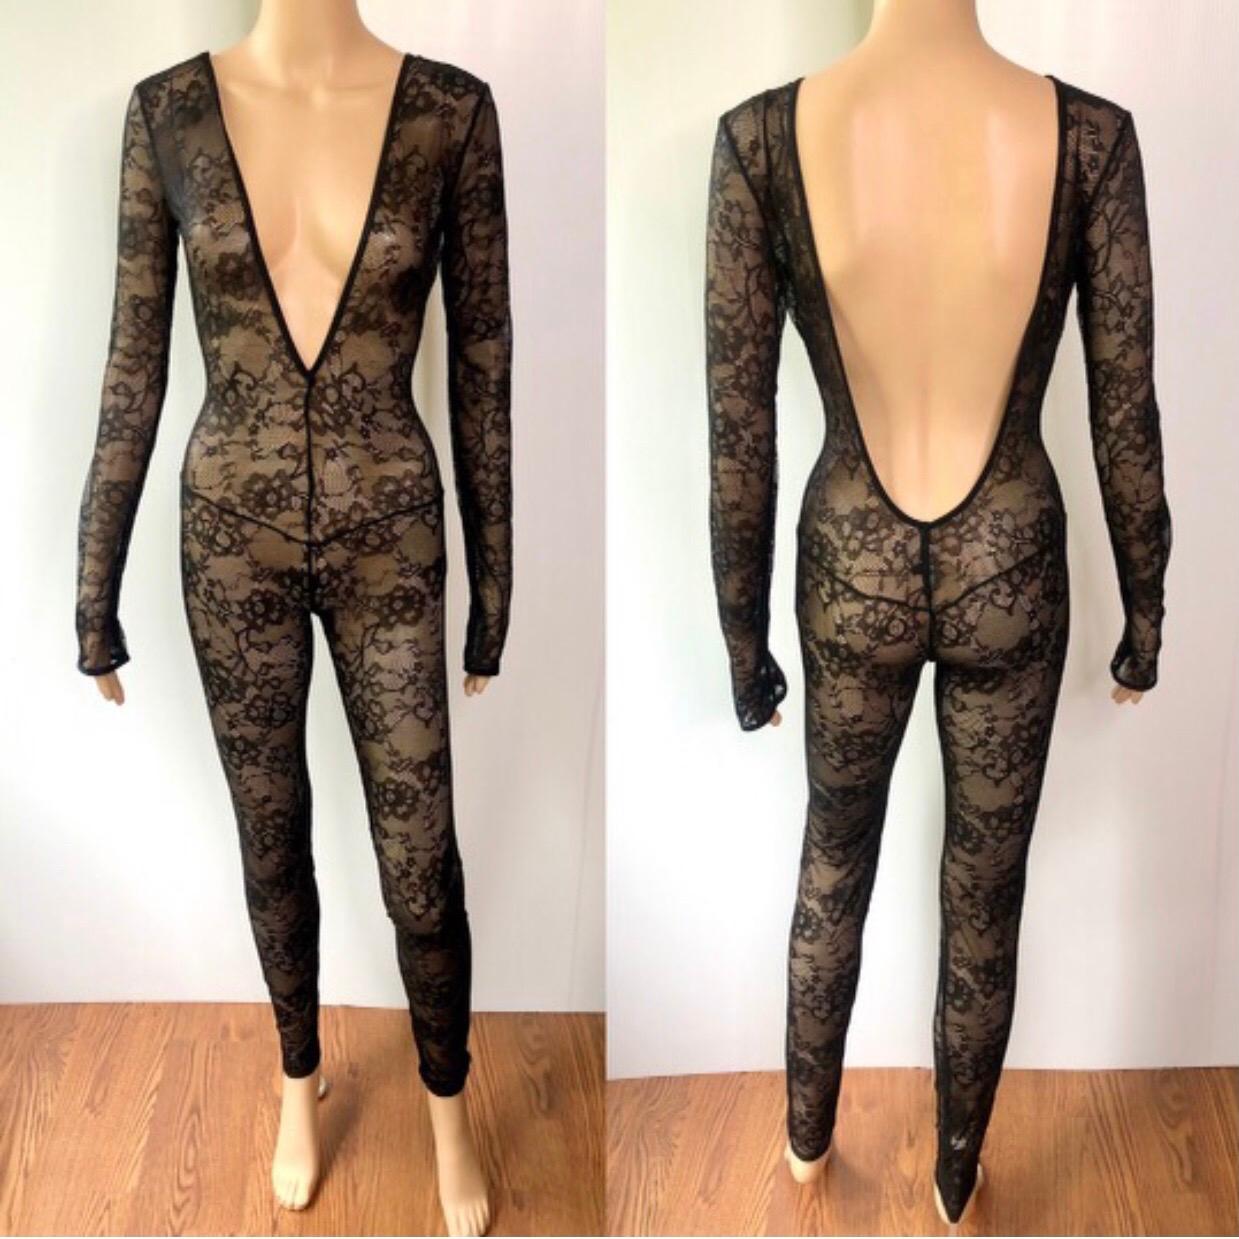 Gucci Plunging Neckline Open Back Sheer Lace Bodycon Black Playsuit Jumpsuit Größe S

Excellent Condition!